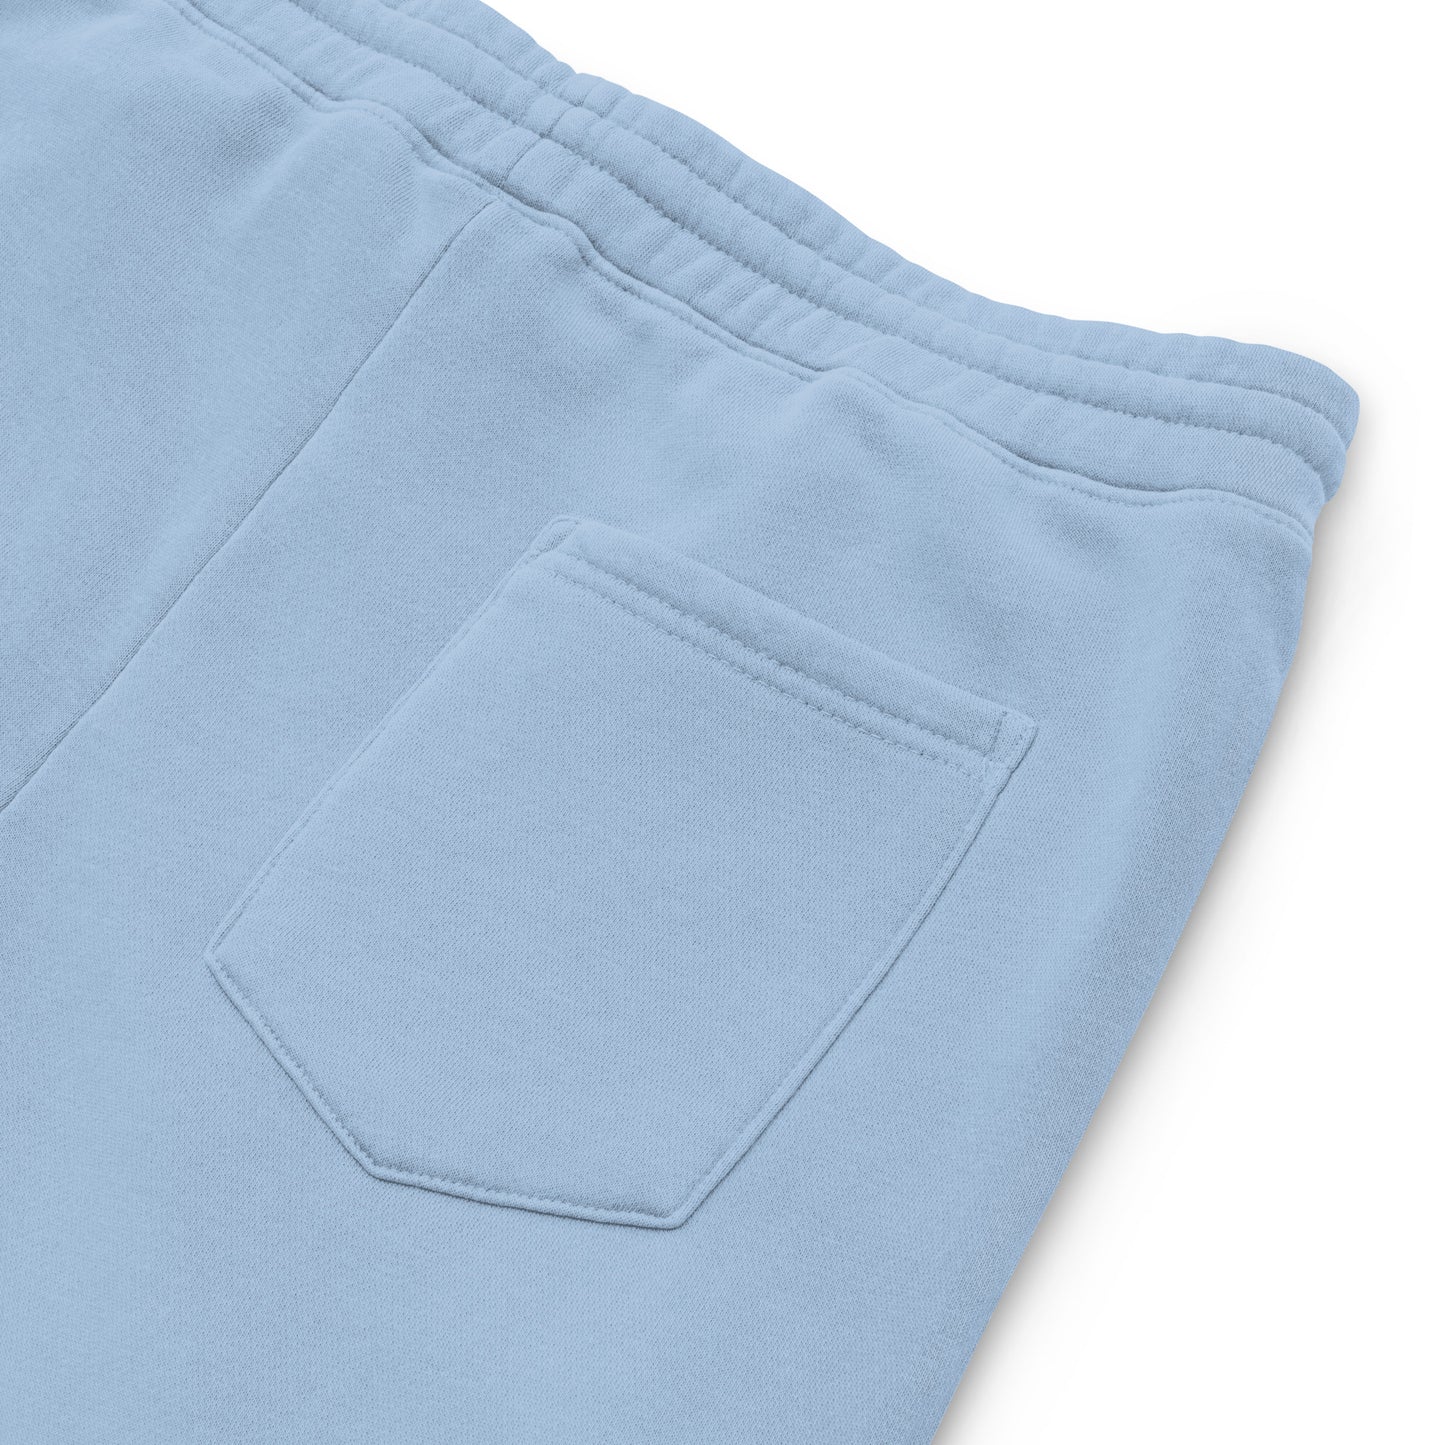 (New) KGE Unltd independent pigment-dyed sweatpants